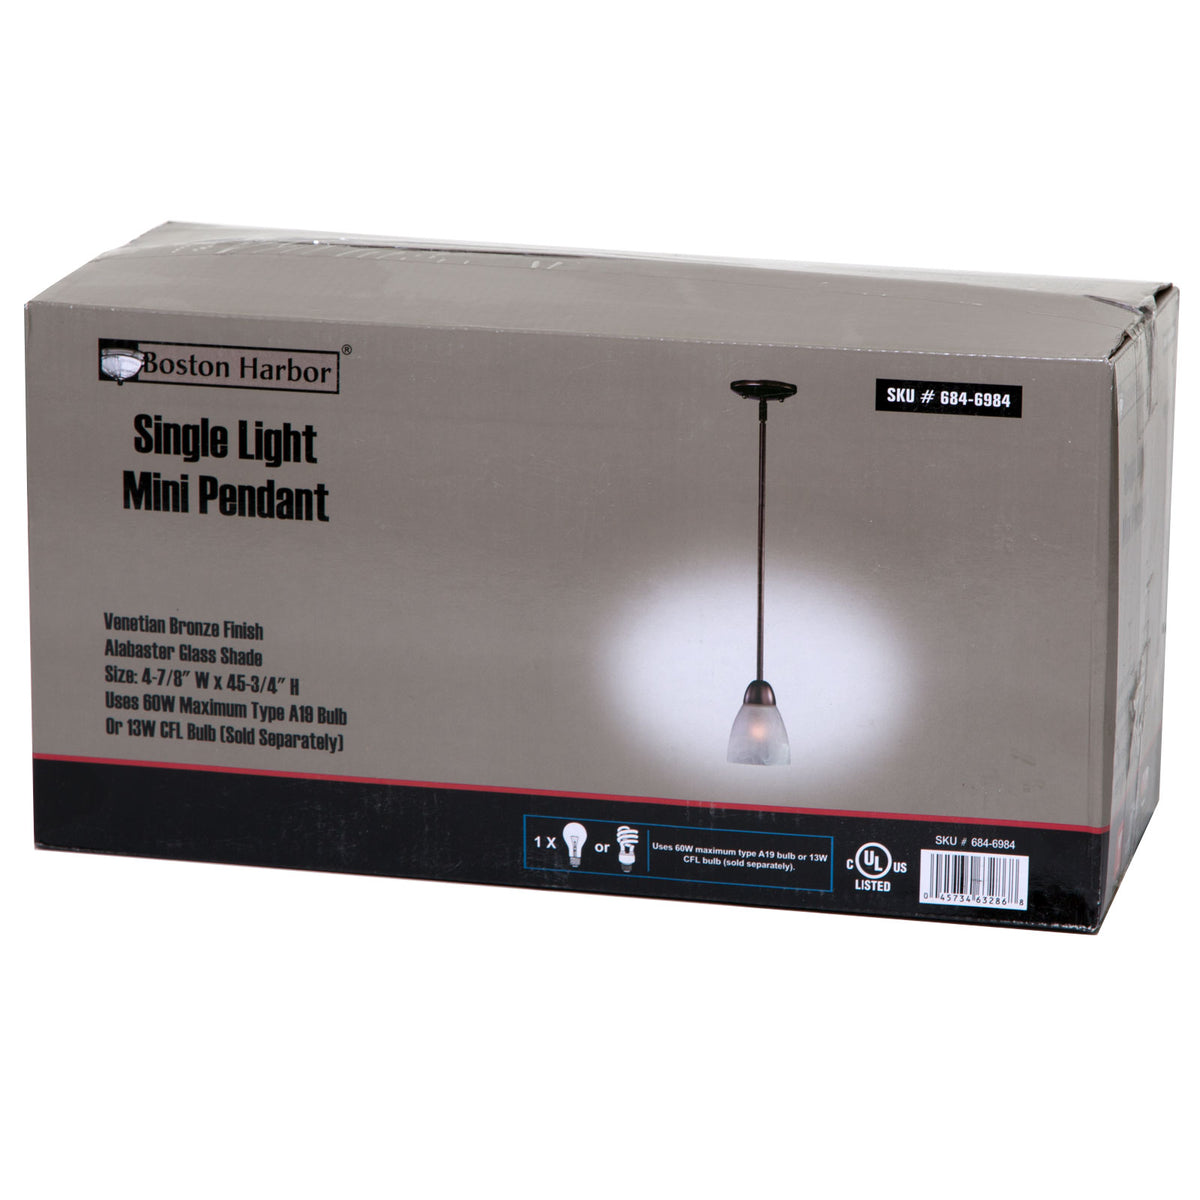 buy pendant light fixtures at cheap rate in bulk. wholesale & retail lighting equipments store. home décor ideas, maintenance, repair replacement parts